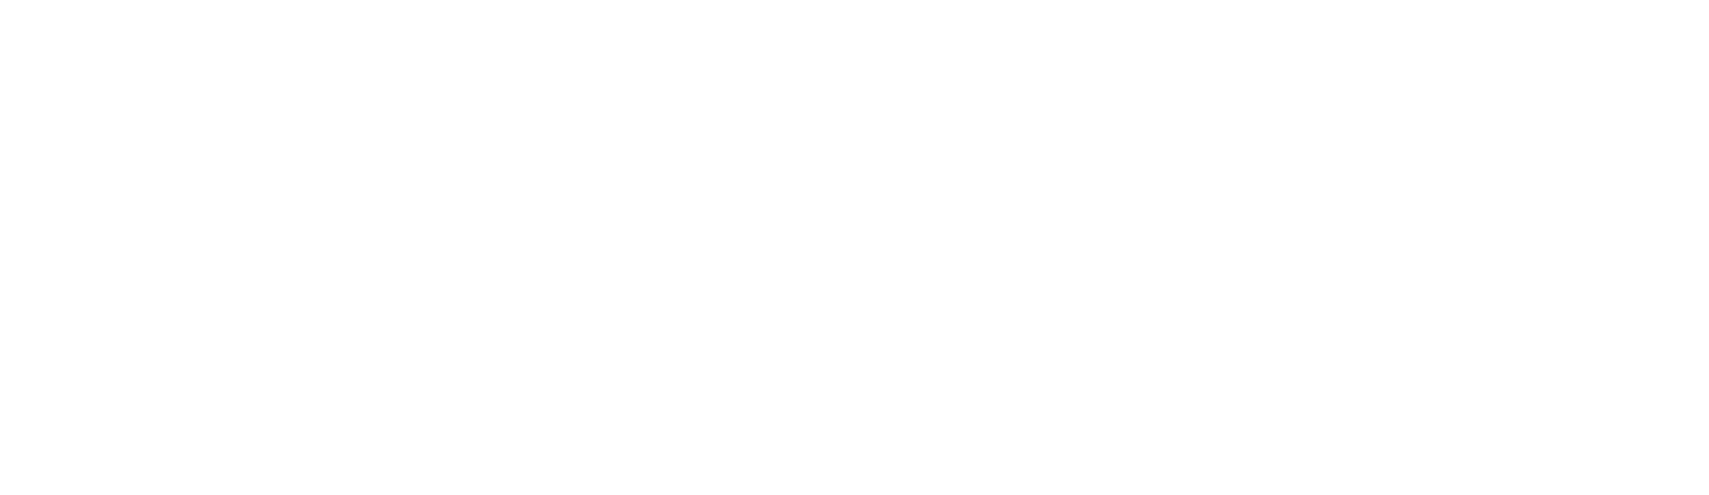 Chartwell-Travel-Black